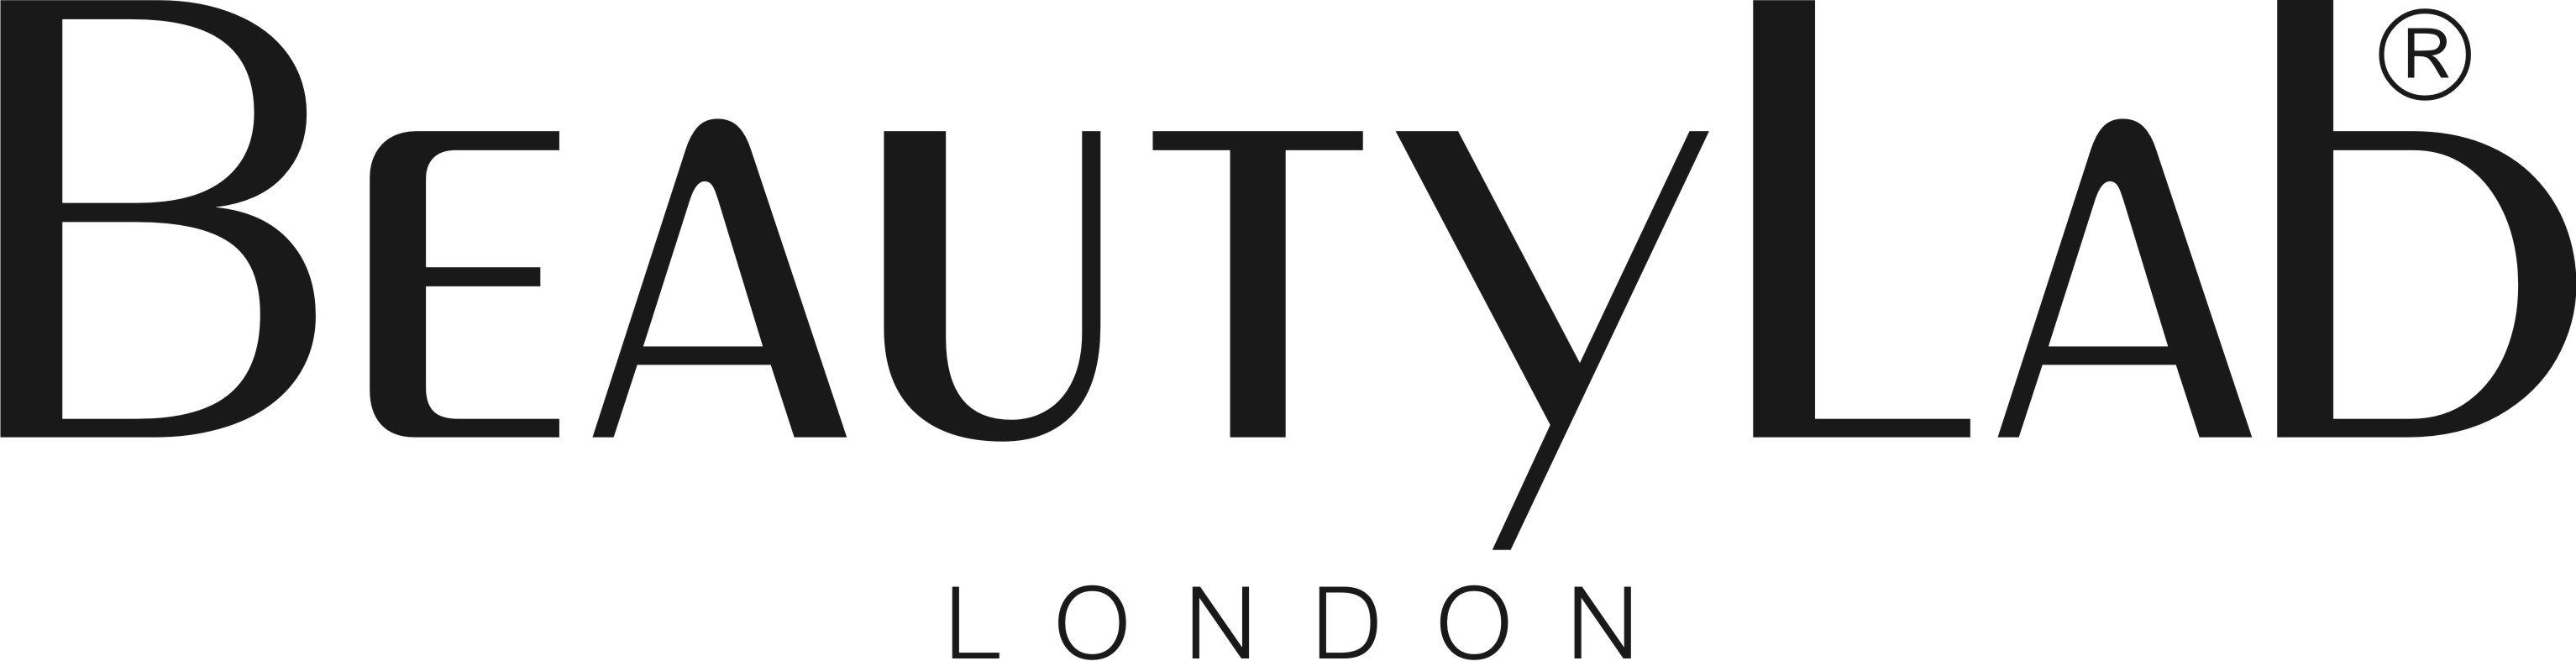 Beautylab london logo high rez 2015 v2jpg